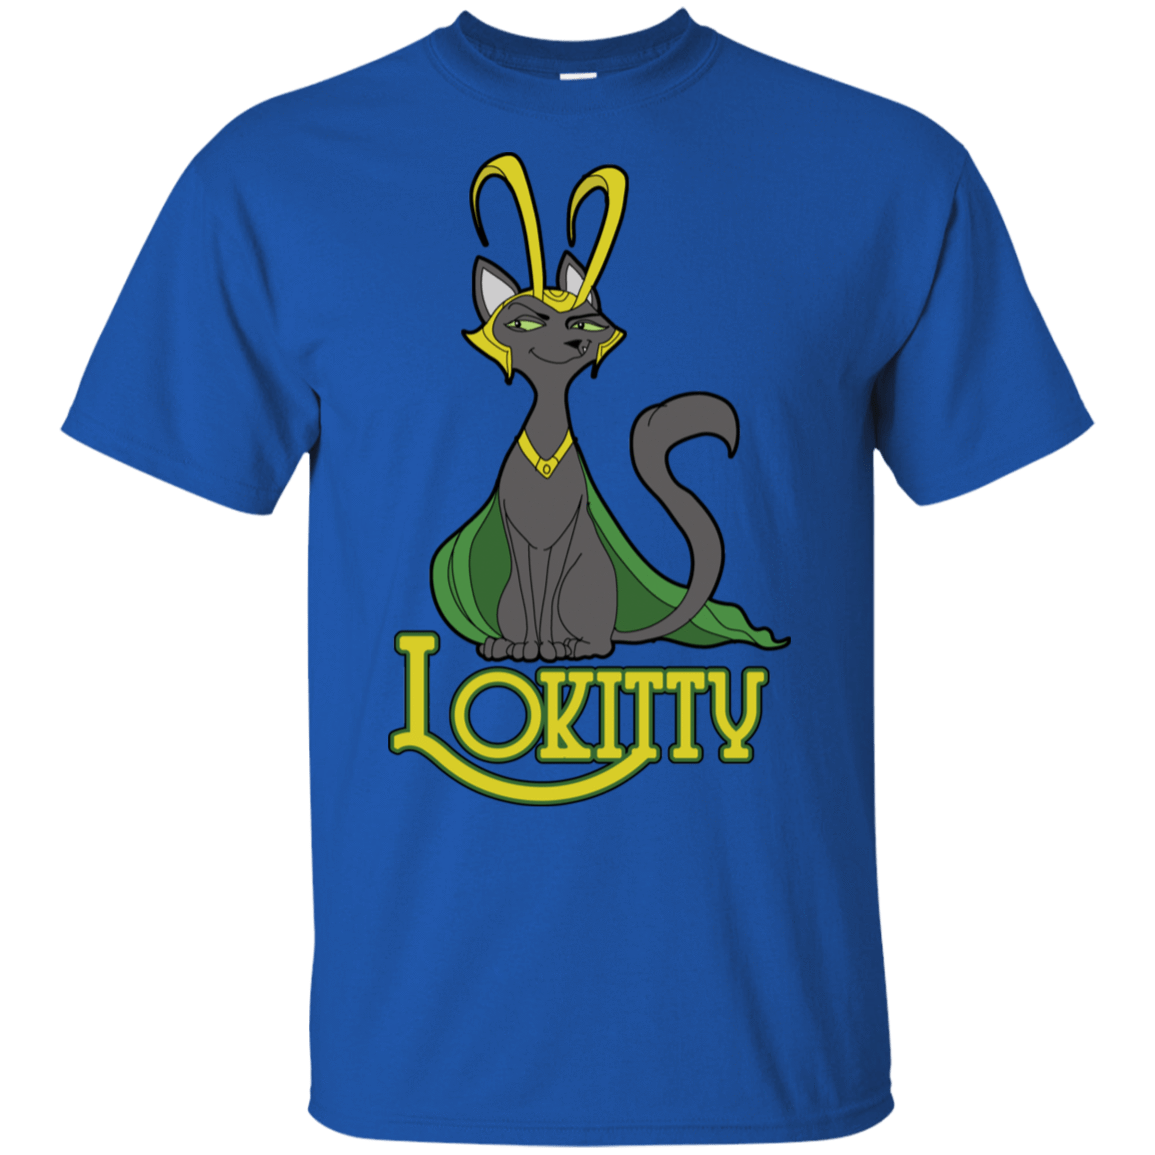 T-Shirts Royal / S Lokitty T-Shirt